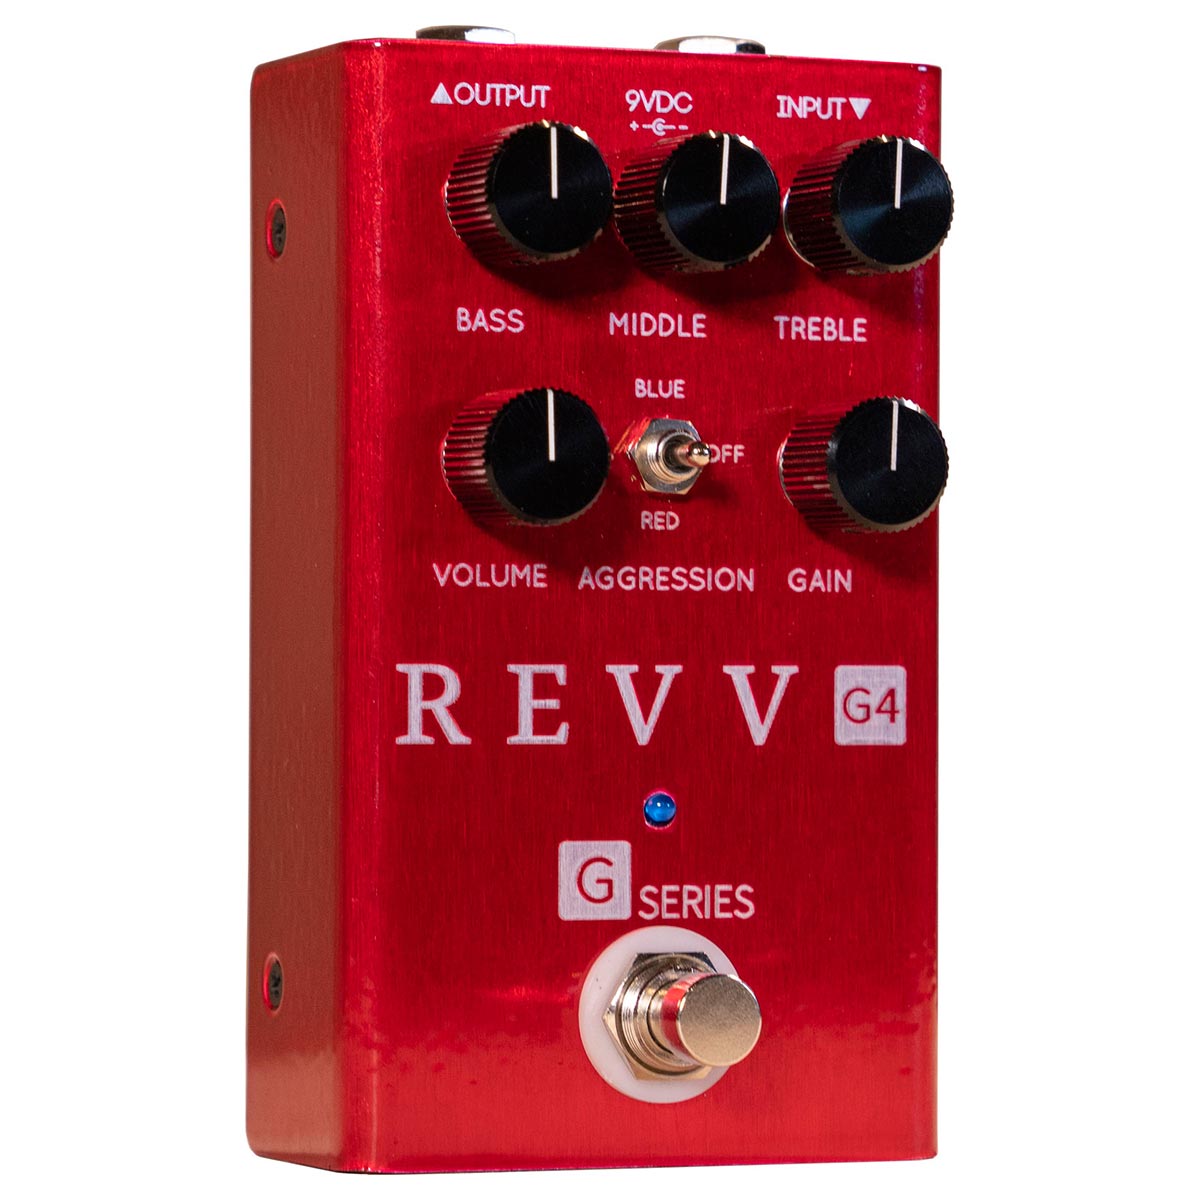 Pedal distorsión guitarra Revv G4